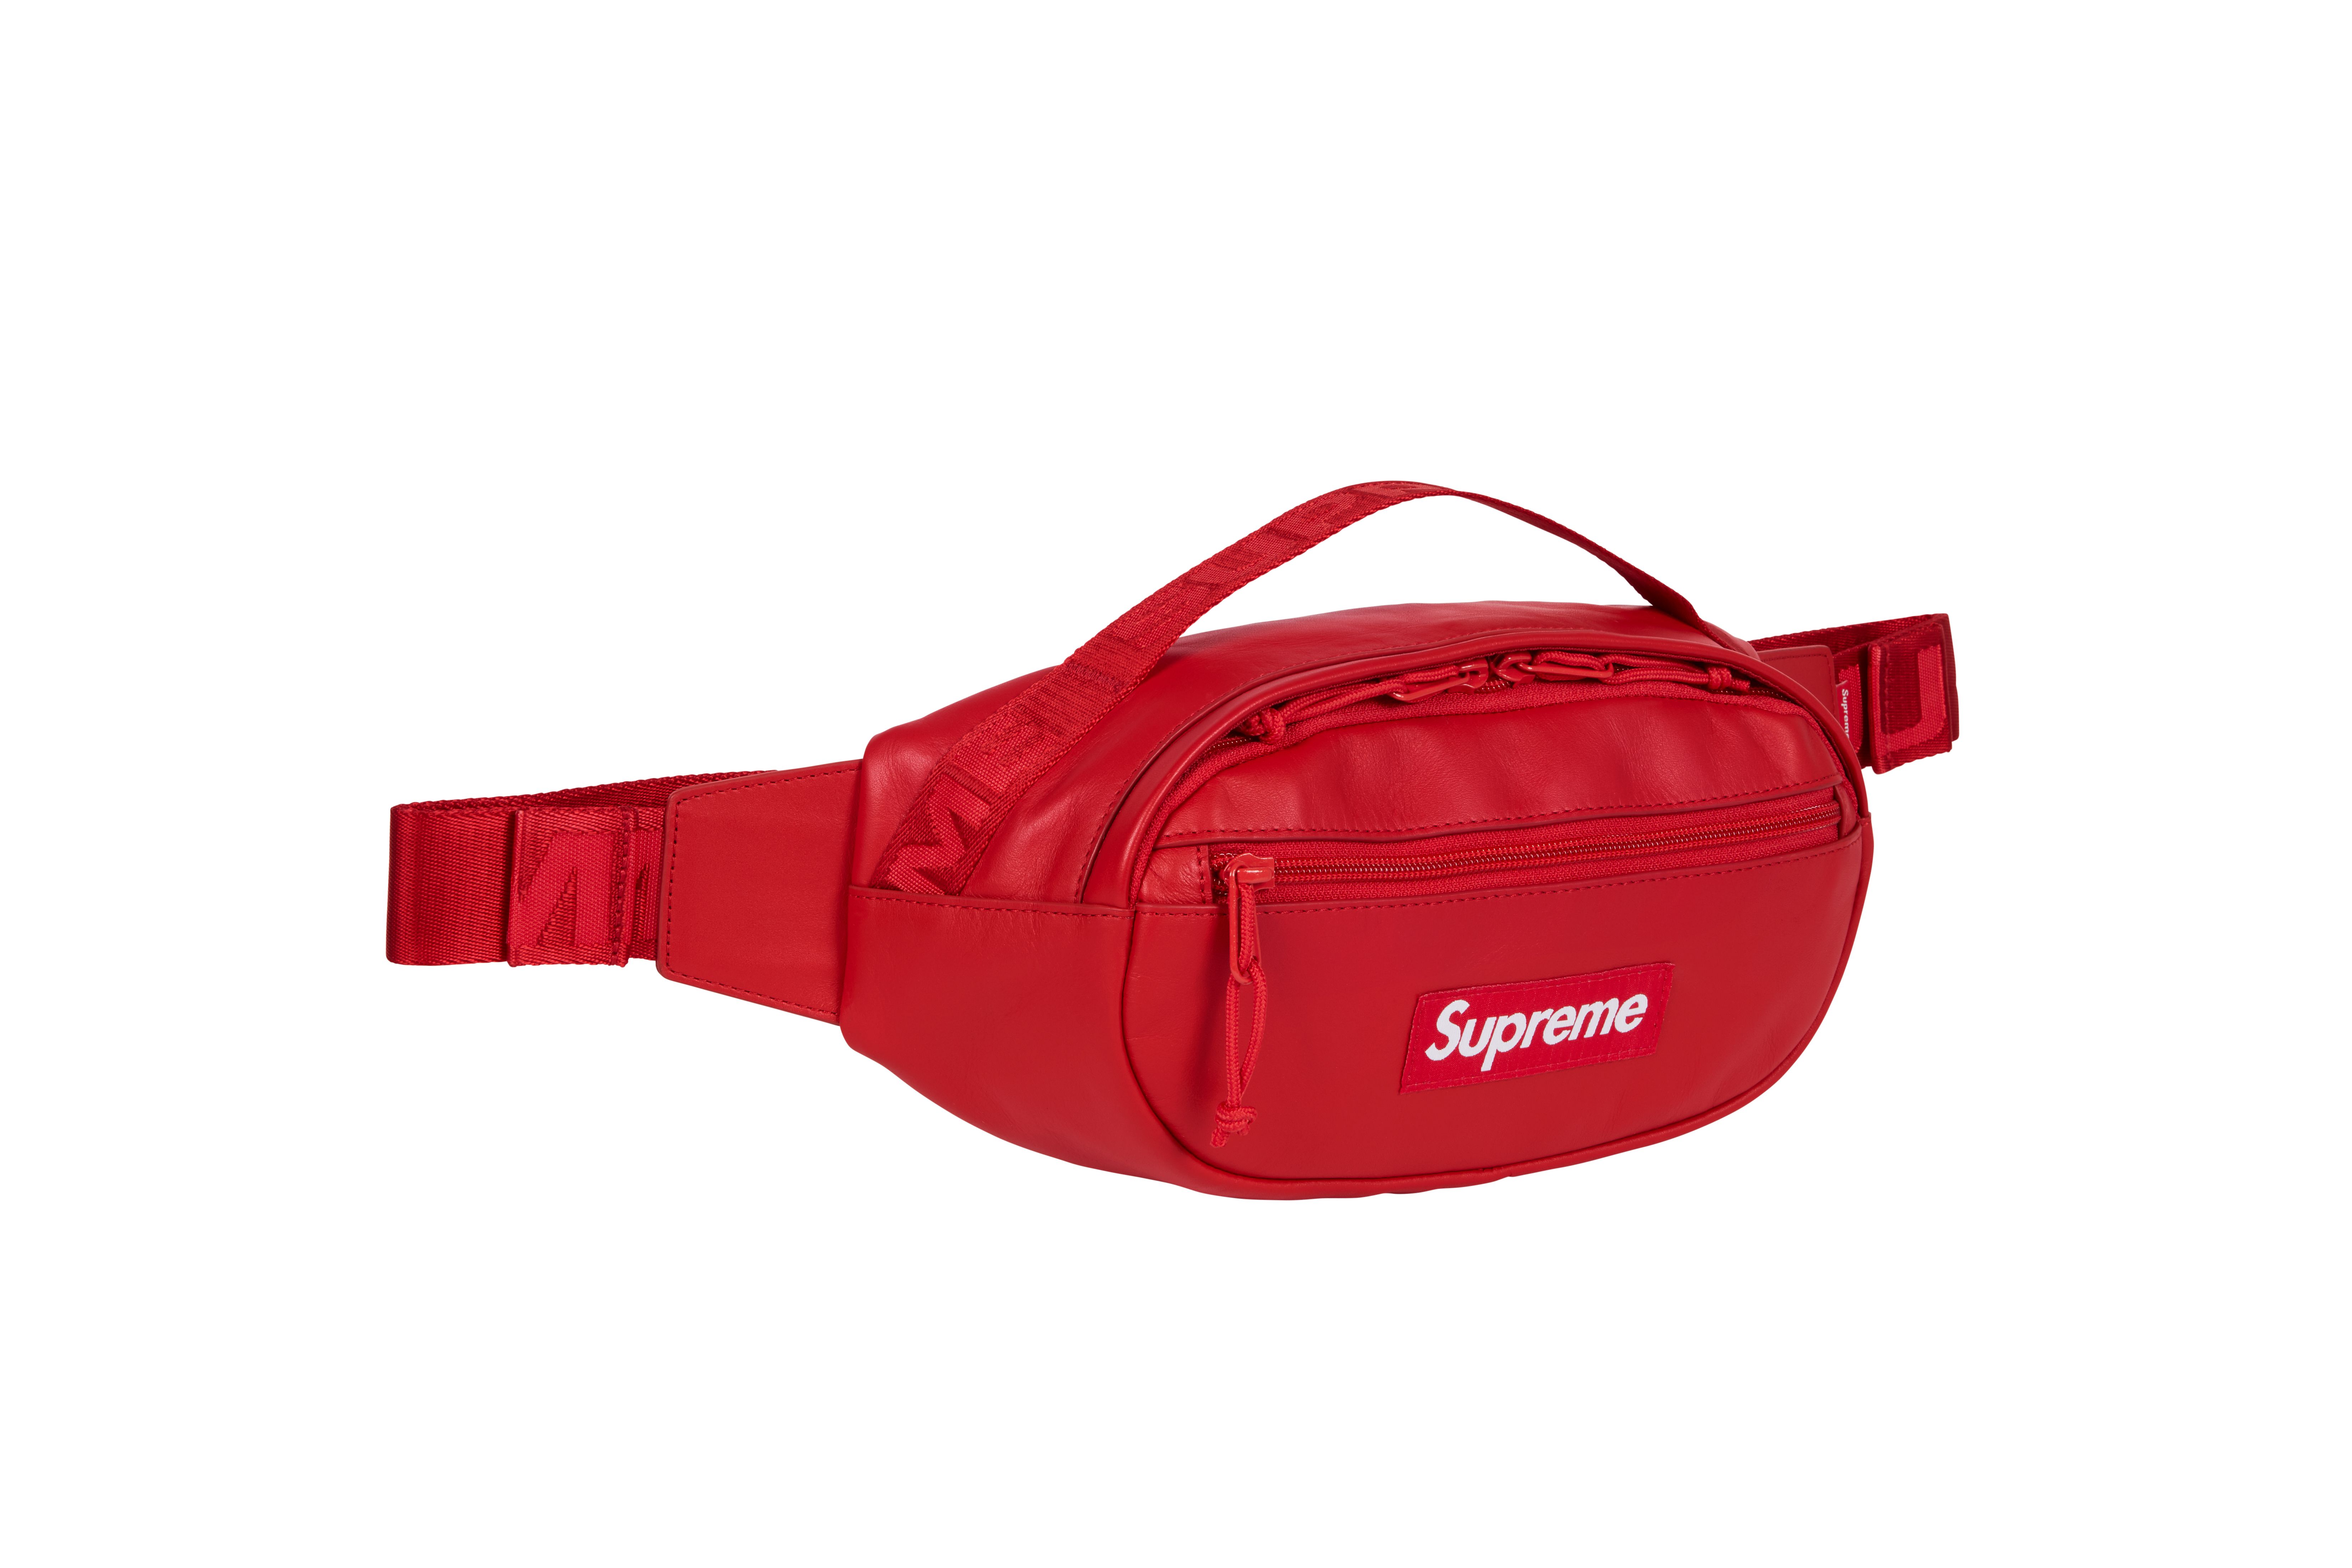 Supreme Waist Bag Red w Black Strap